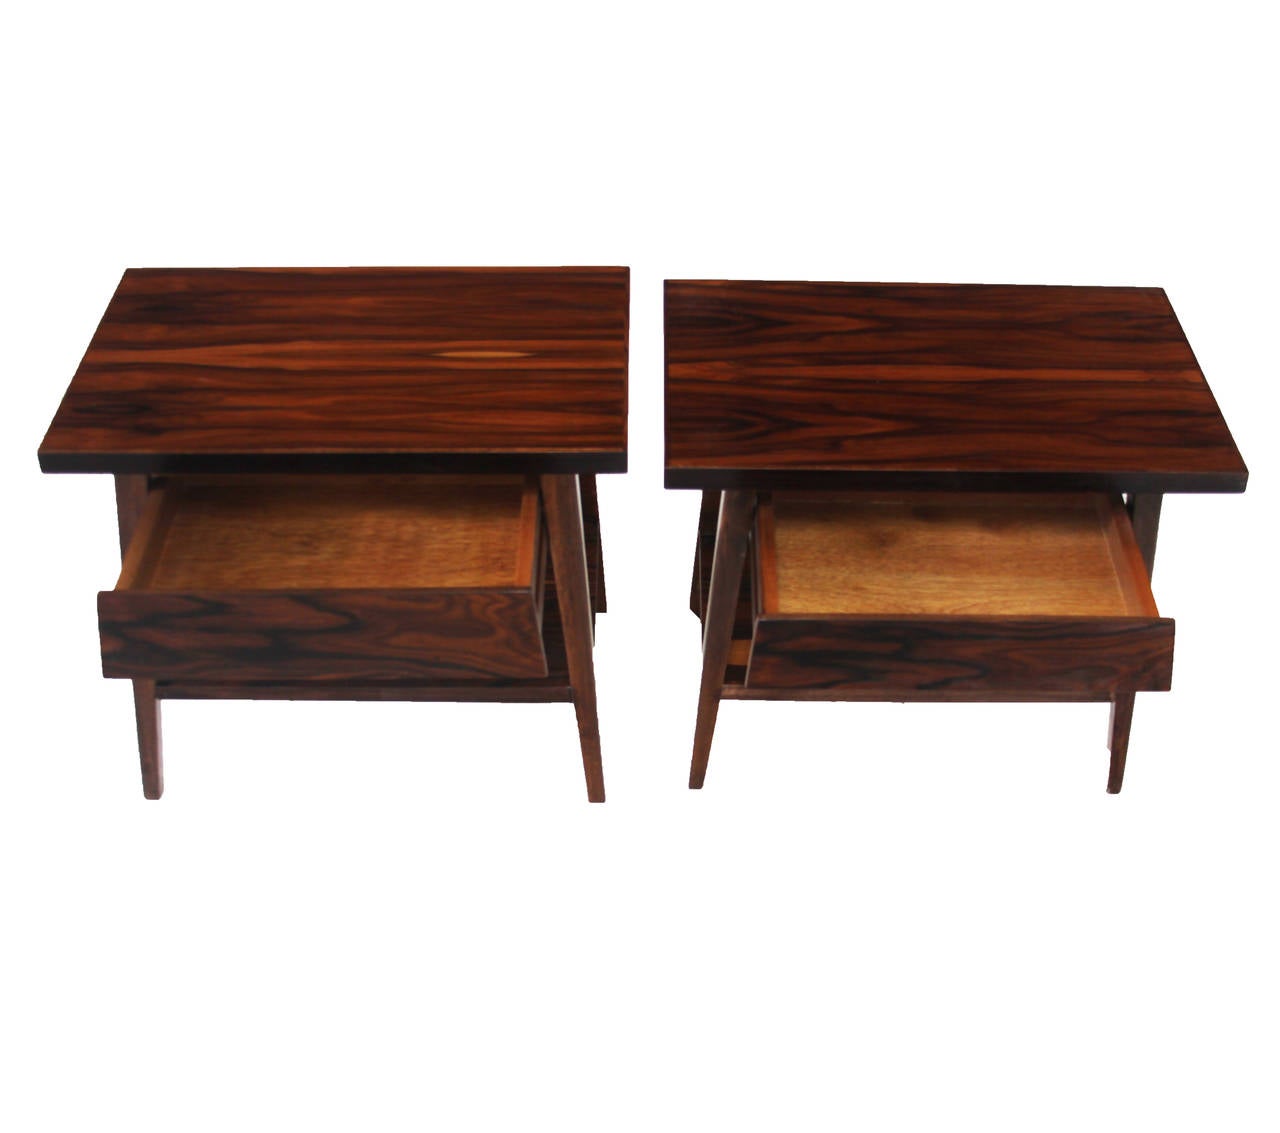 Brazilian Pair of Vintage Rosewood Side Tables or Nightstands